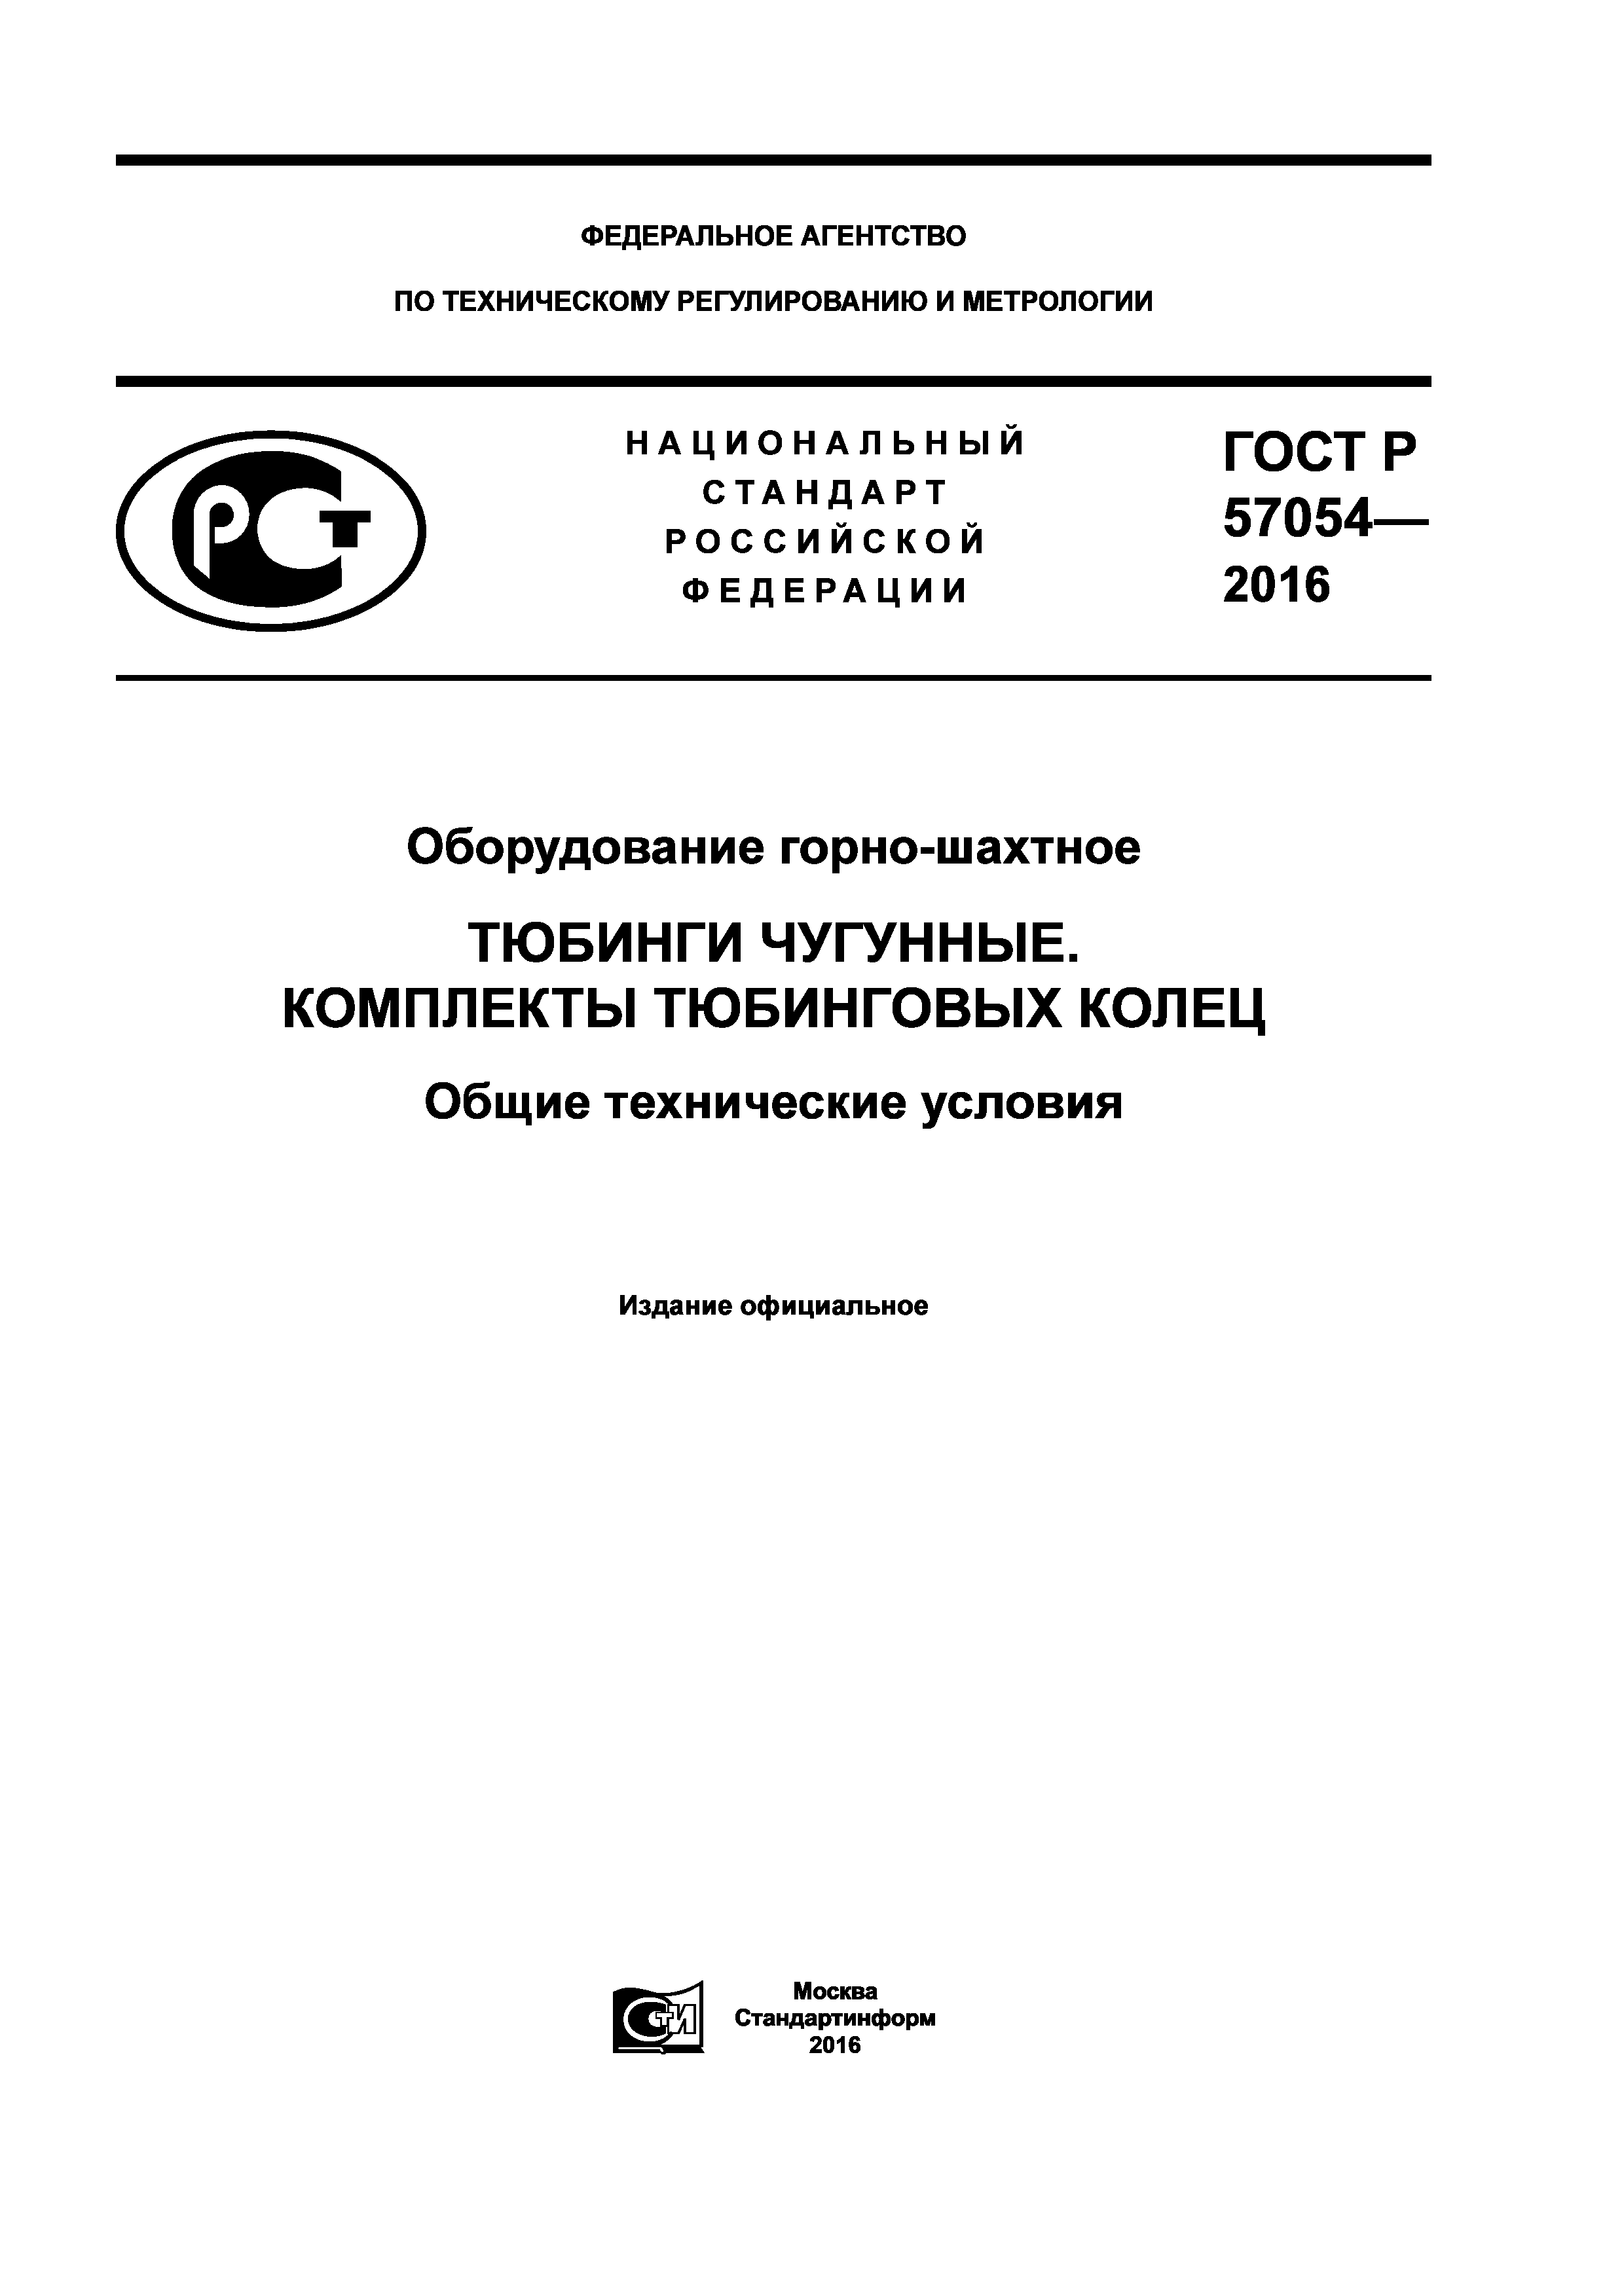 ГОСТ Р 57054-2016